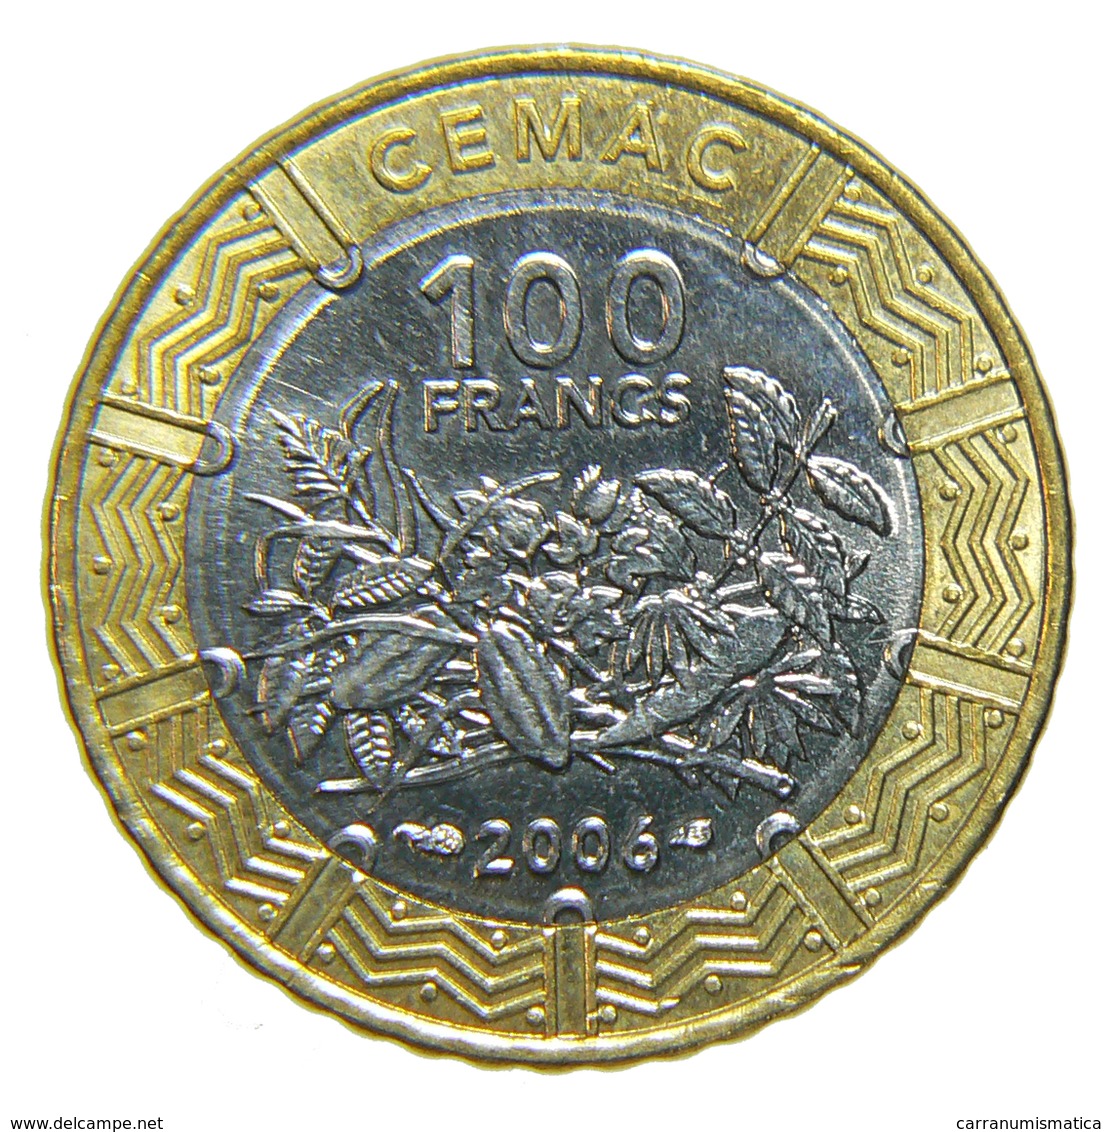 [NC] REPUBBLICA CENTROAFRICANA - 100 FRANCHI 2006 - BIMETALLICA - Repubblica Centroafricana